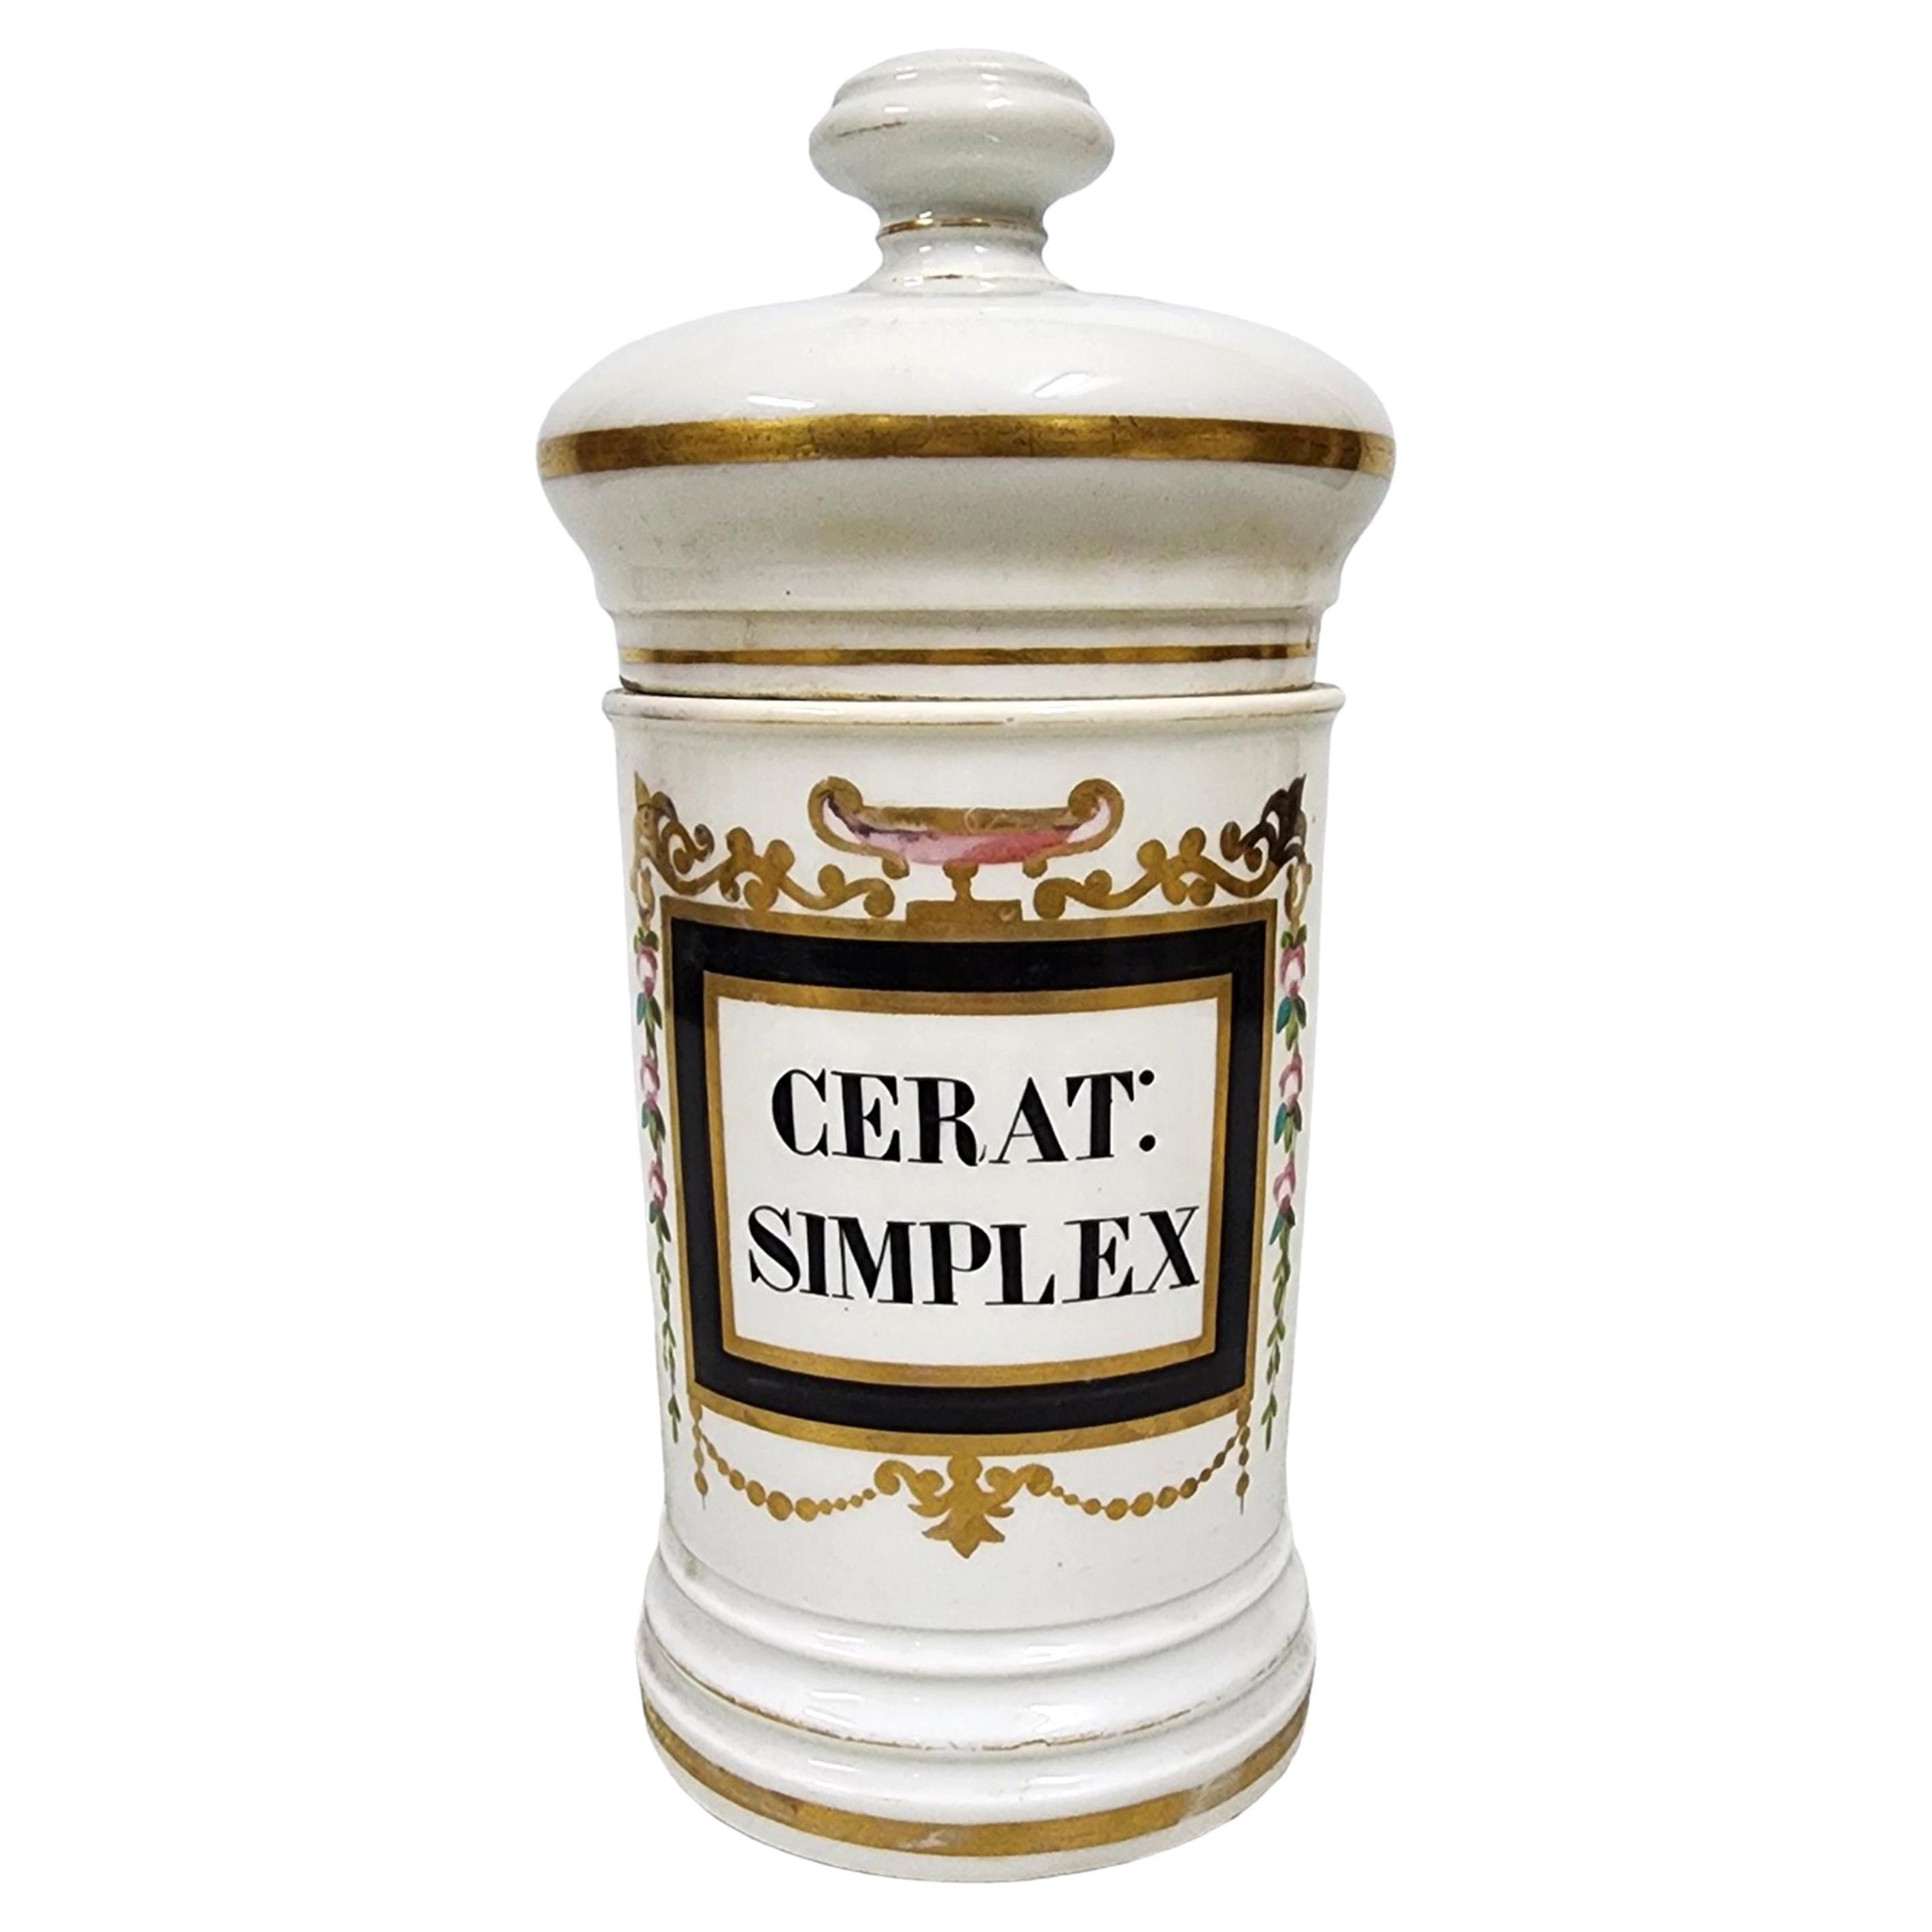 19th Century French Glazed Porcelain Apothecary/Pharmacy Jar - 'CERAT: SIMPLEX'